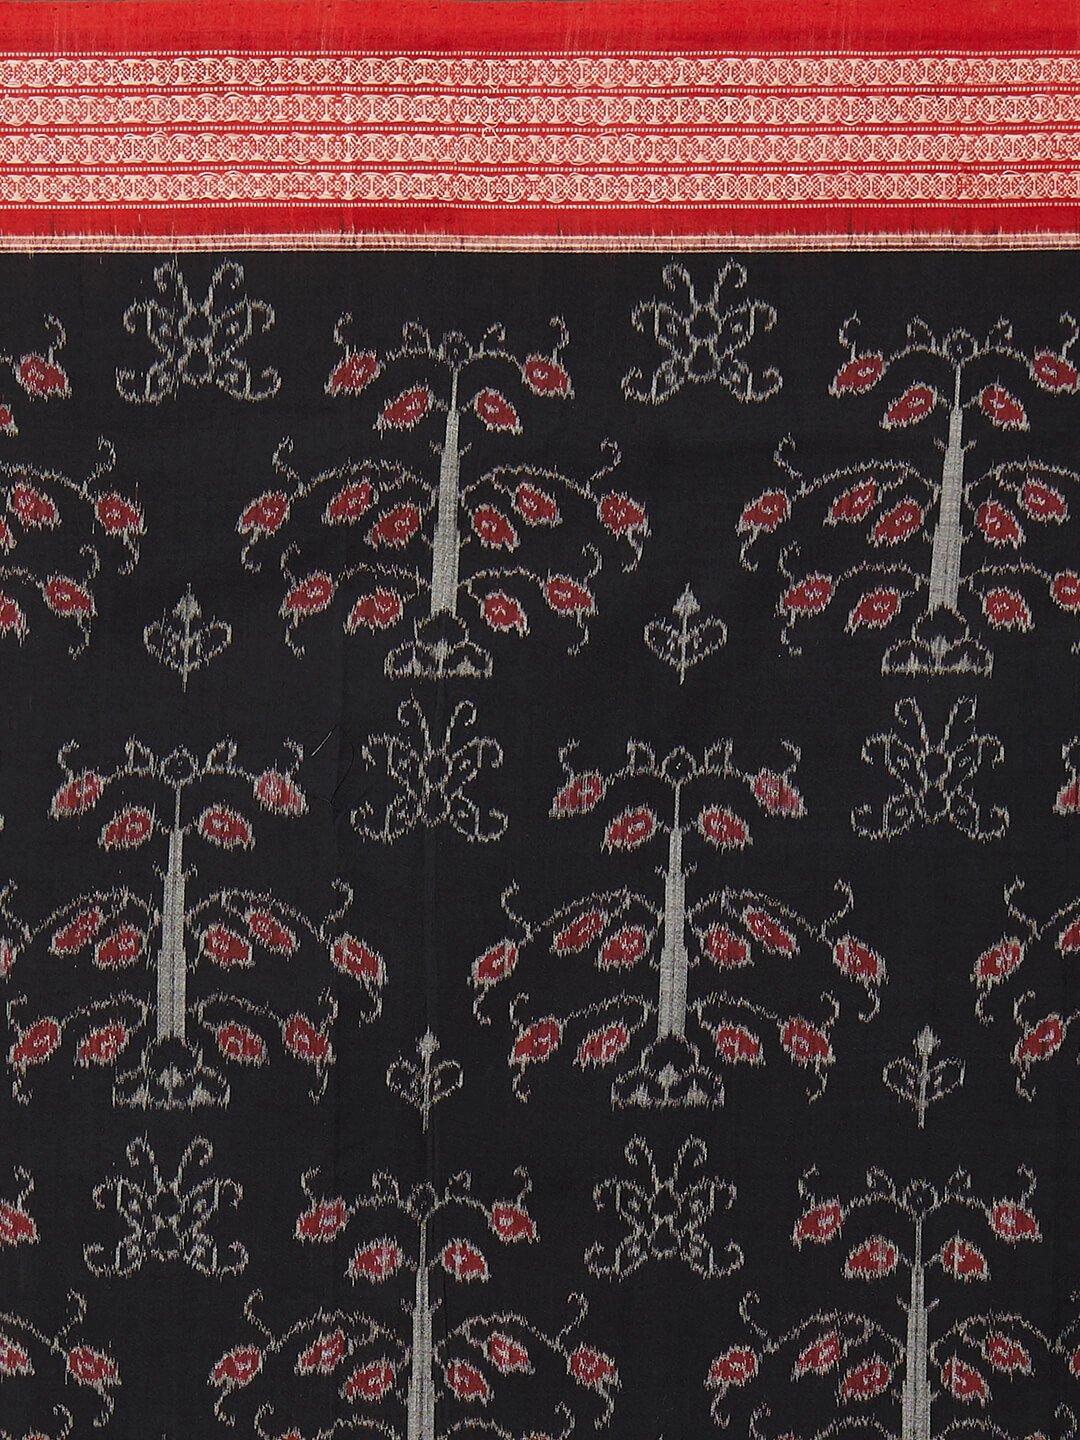 CraftsCollection.in - Black and Red Sambalpuri Bomkai Cotton Saree